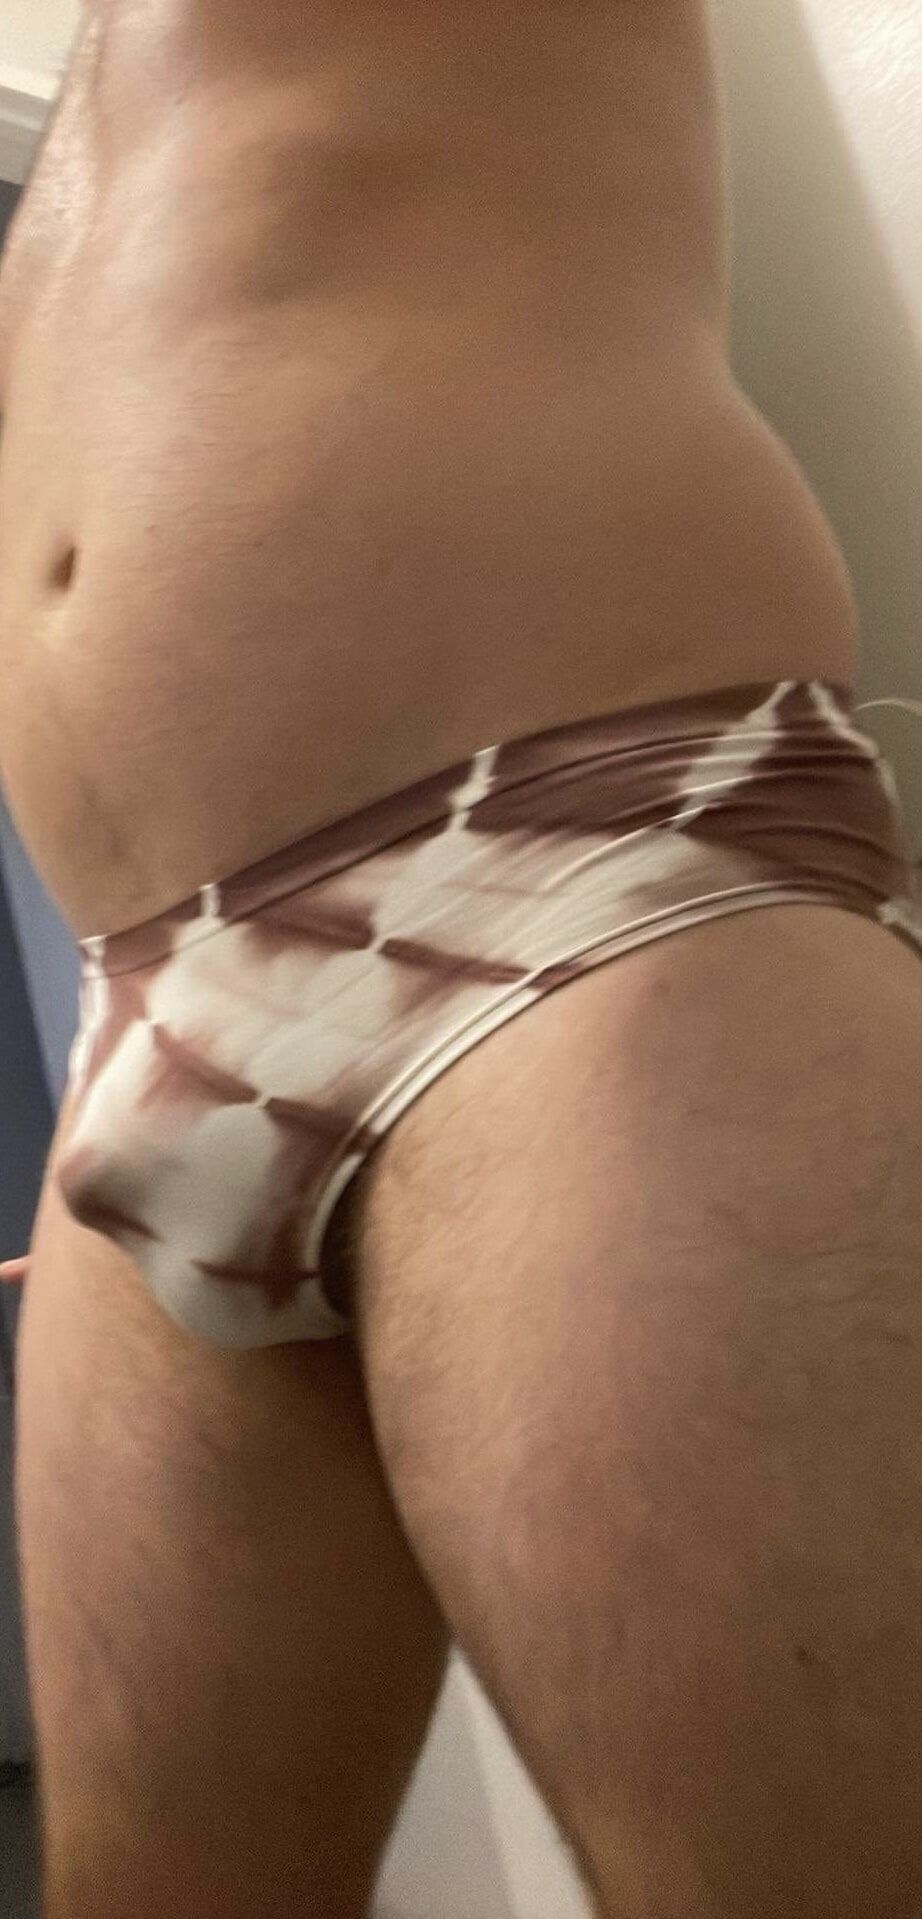 panties thong bubble butt gay undies #26